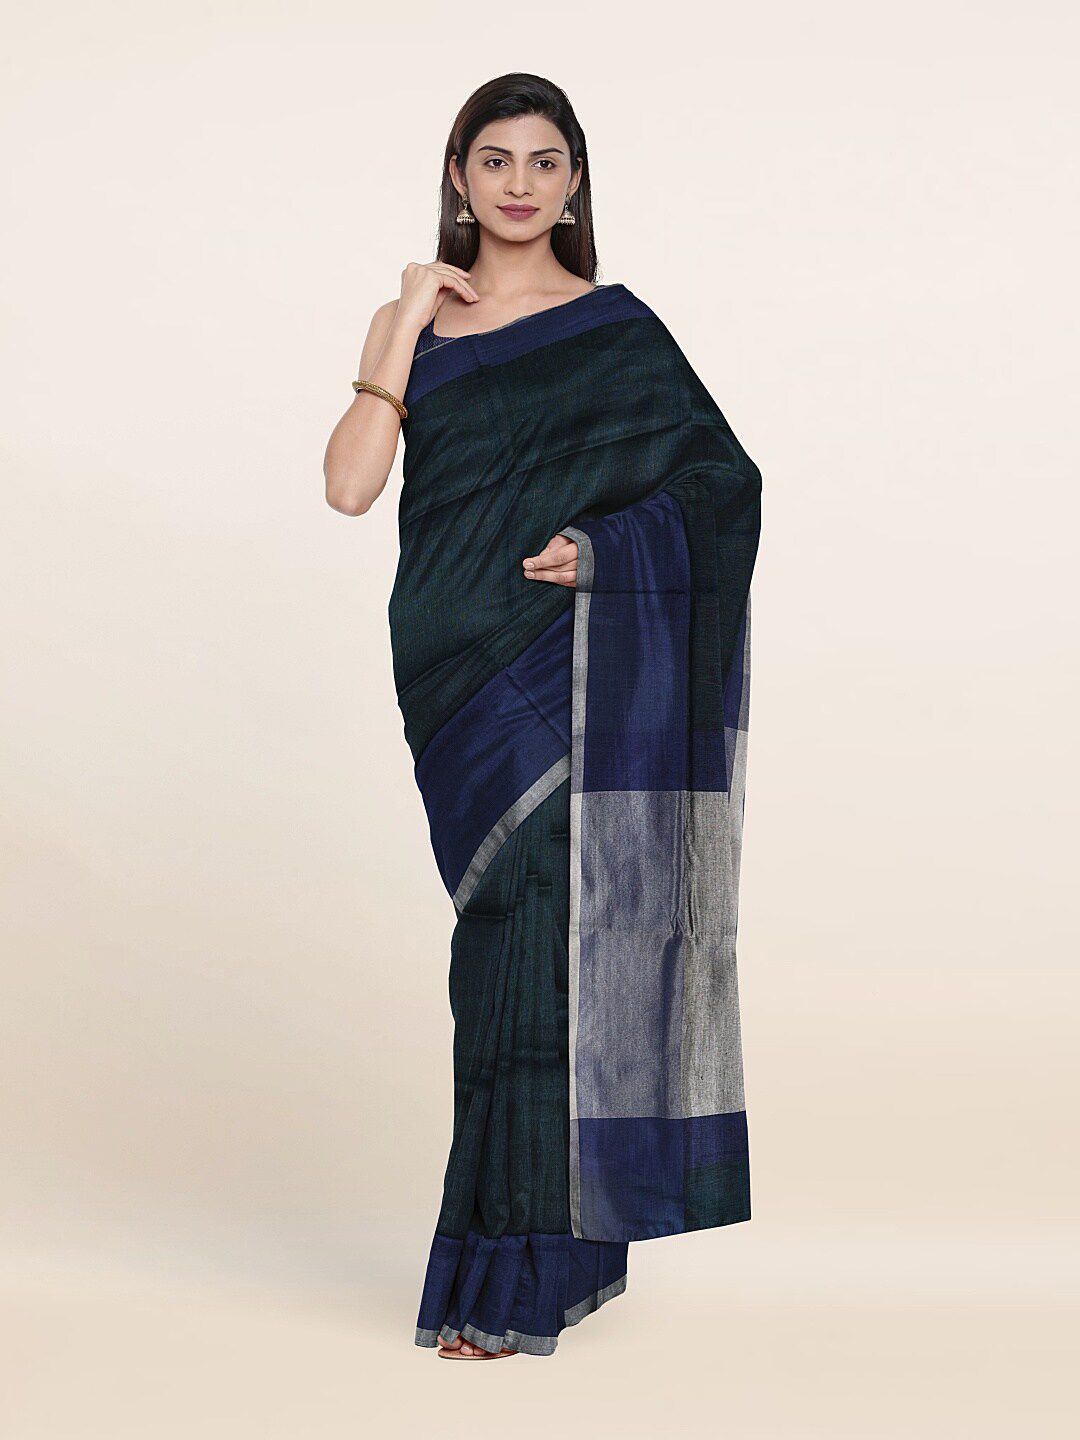 Pothys Navy Blue Linen Blend Saree Price in India